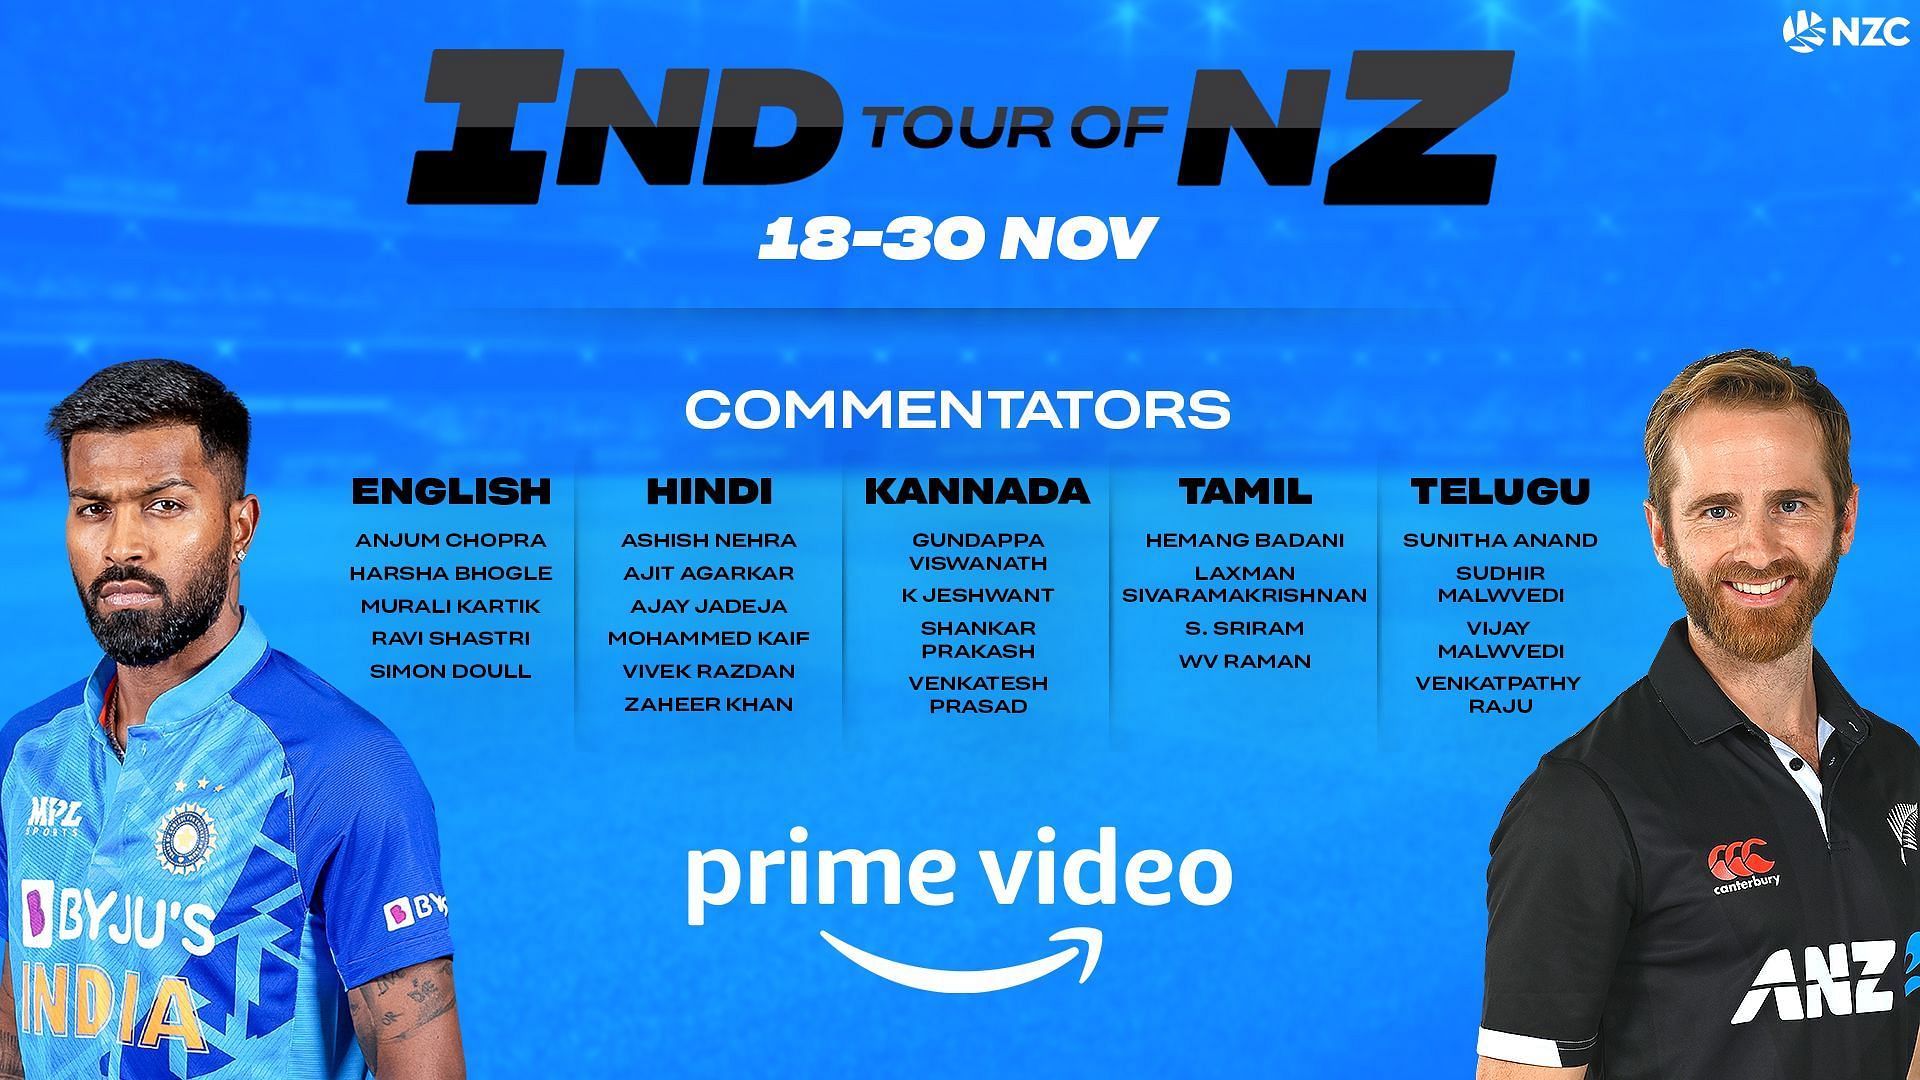 india newzealand t20 match live video